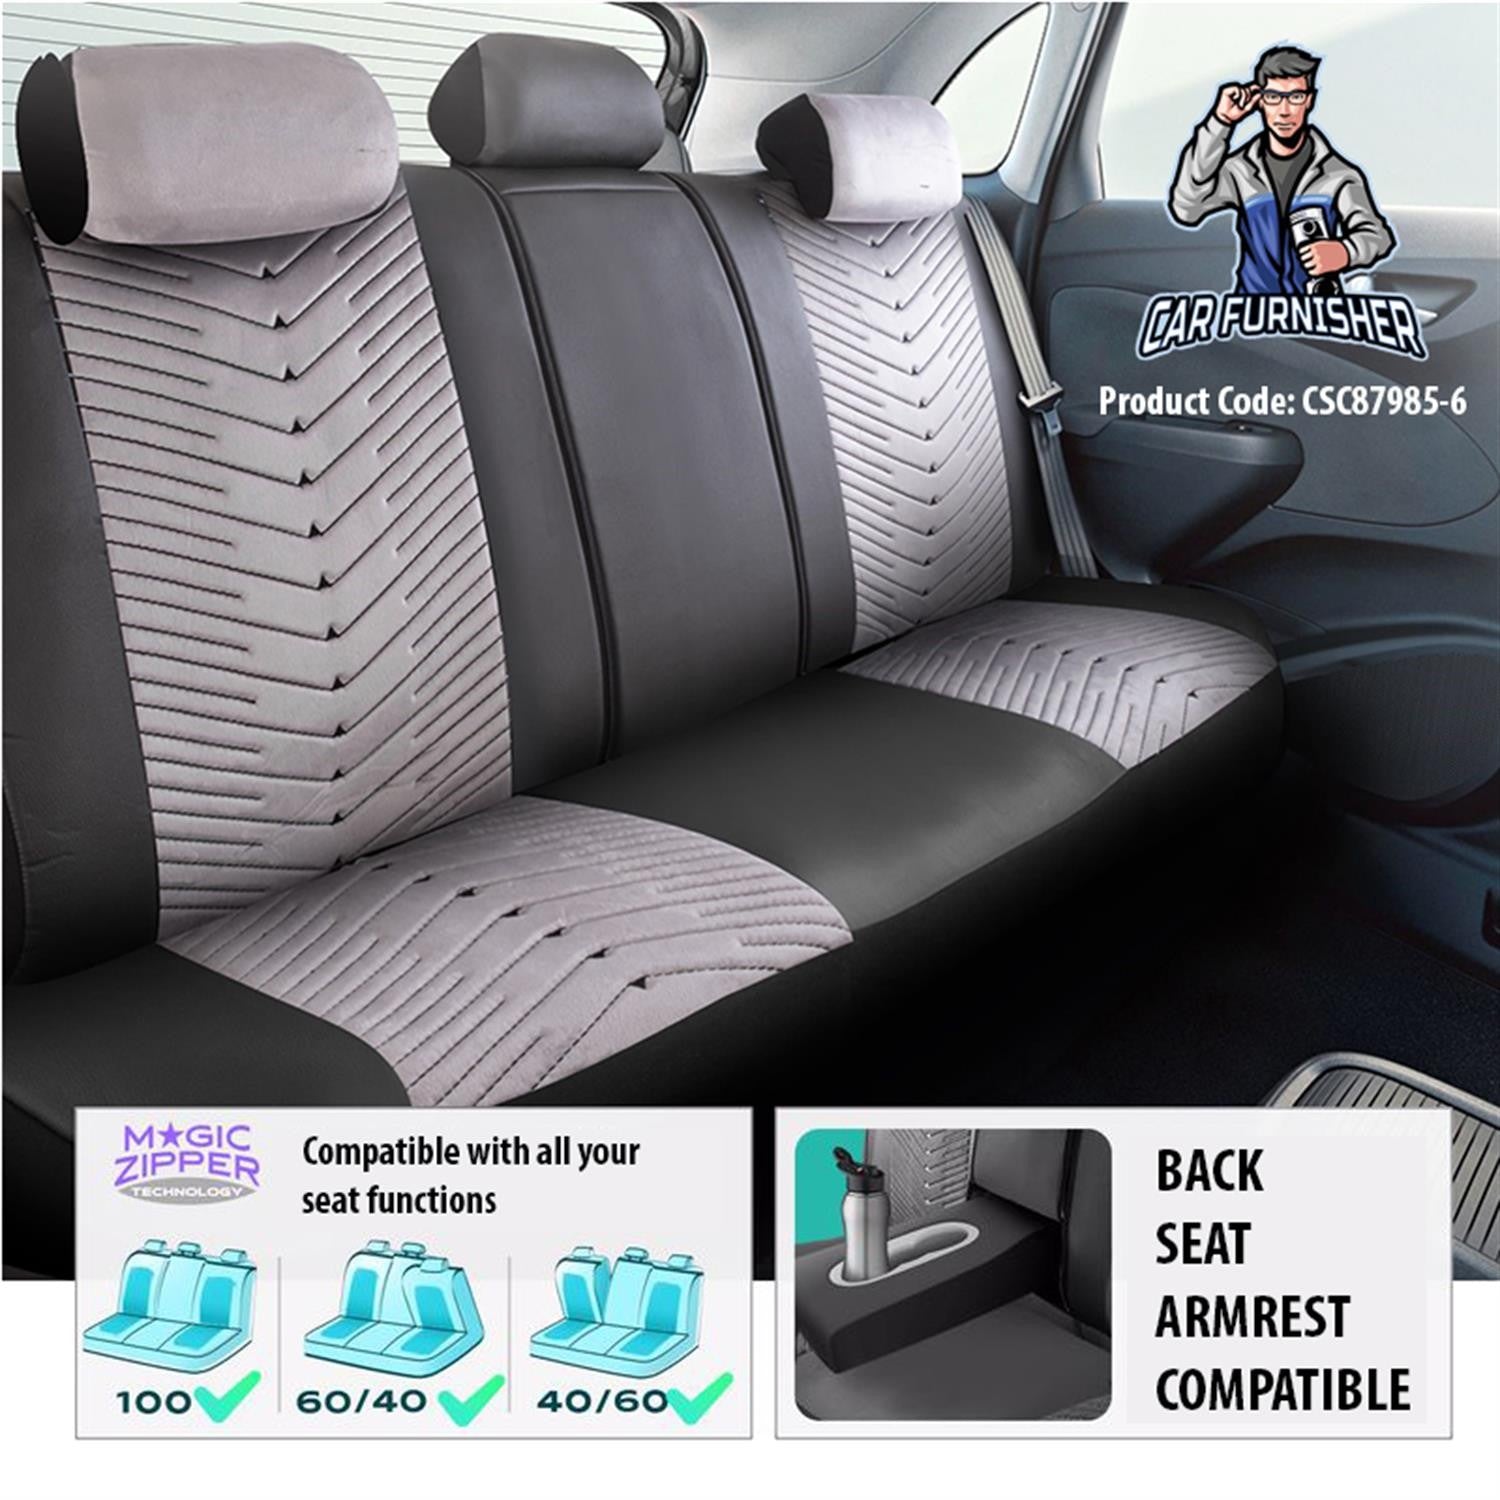 Luxury Car Seat Cover Set (7 Colors) | Dubai Series Silver Leather & Fabric